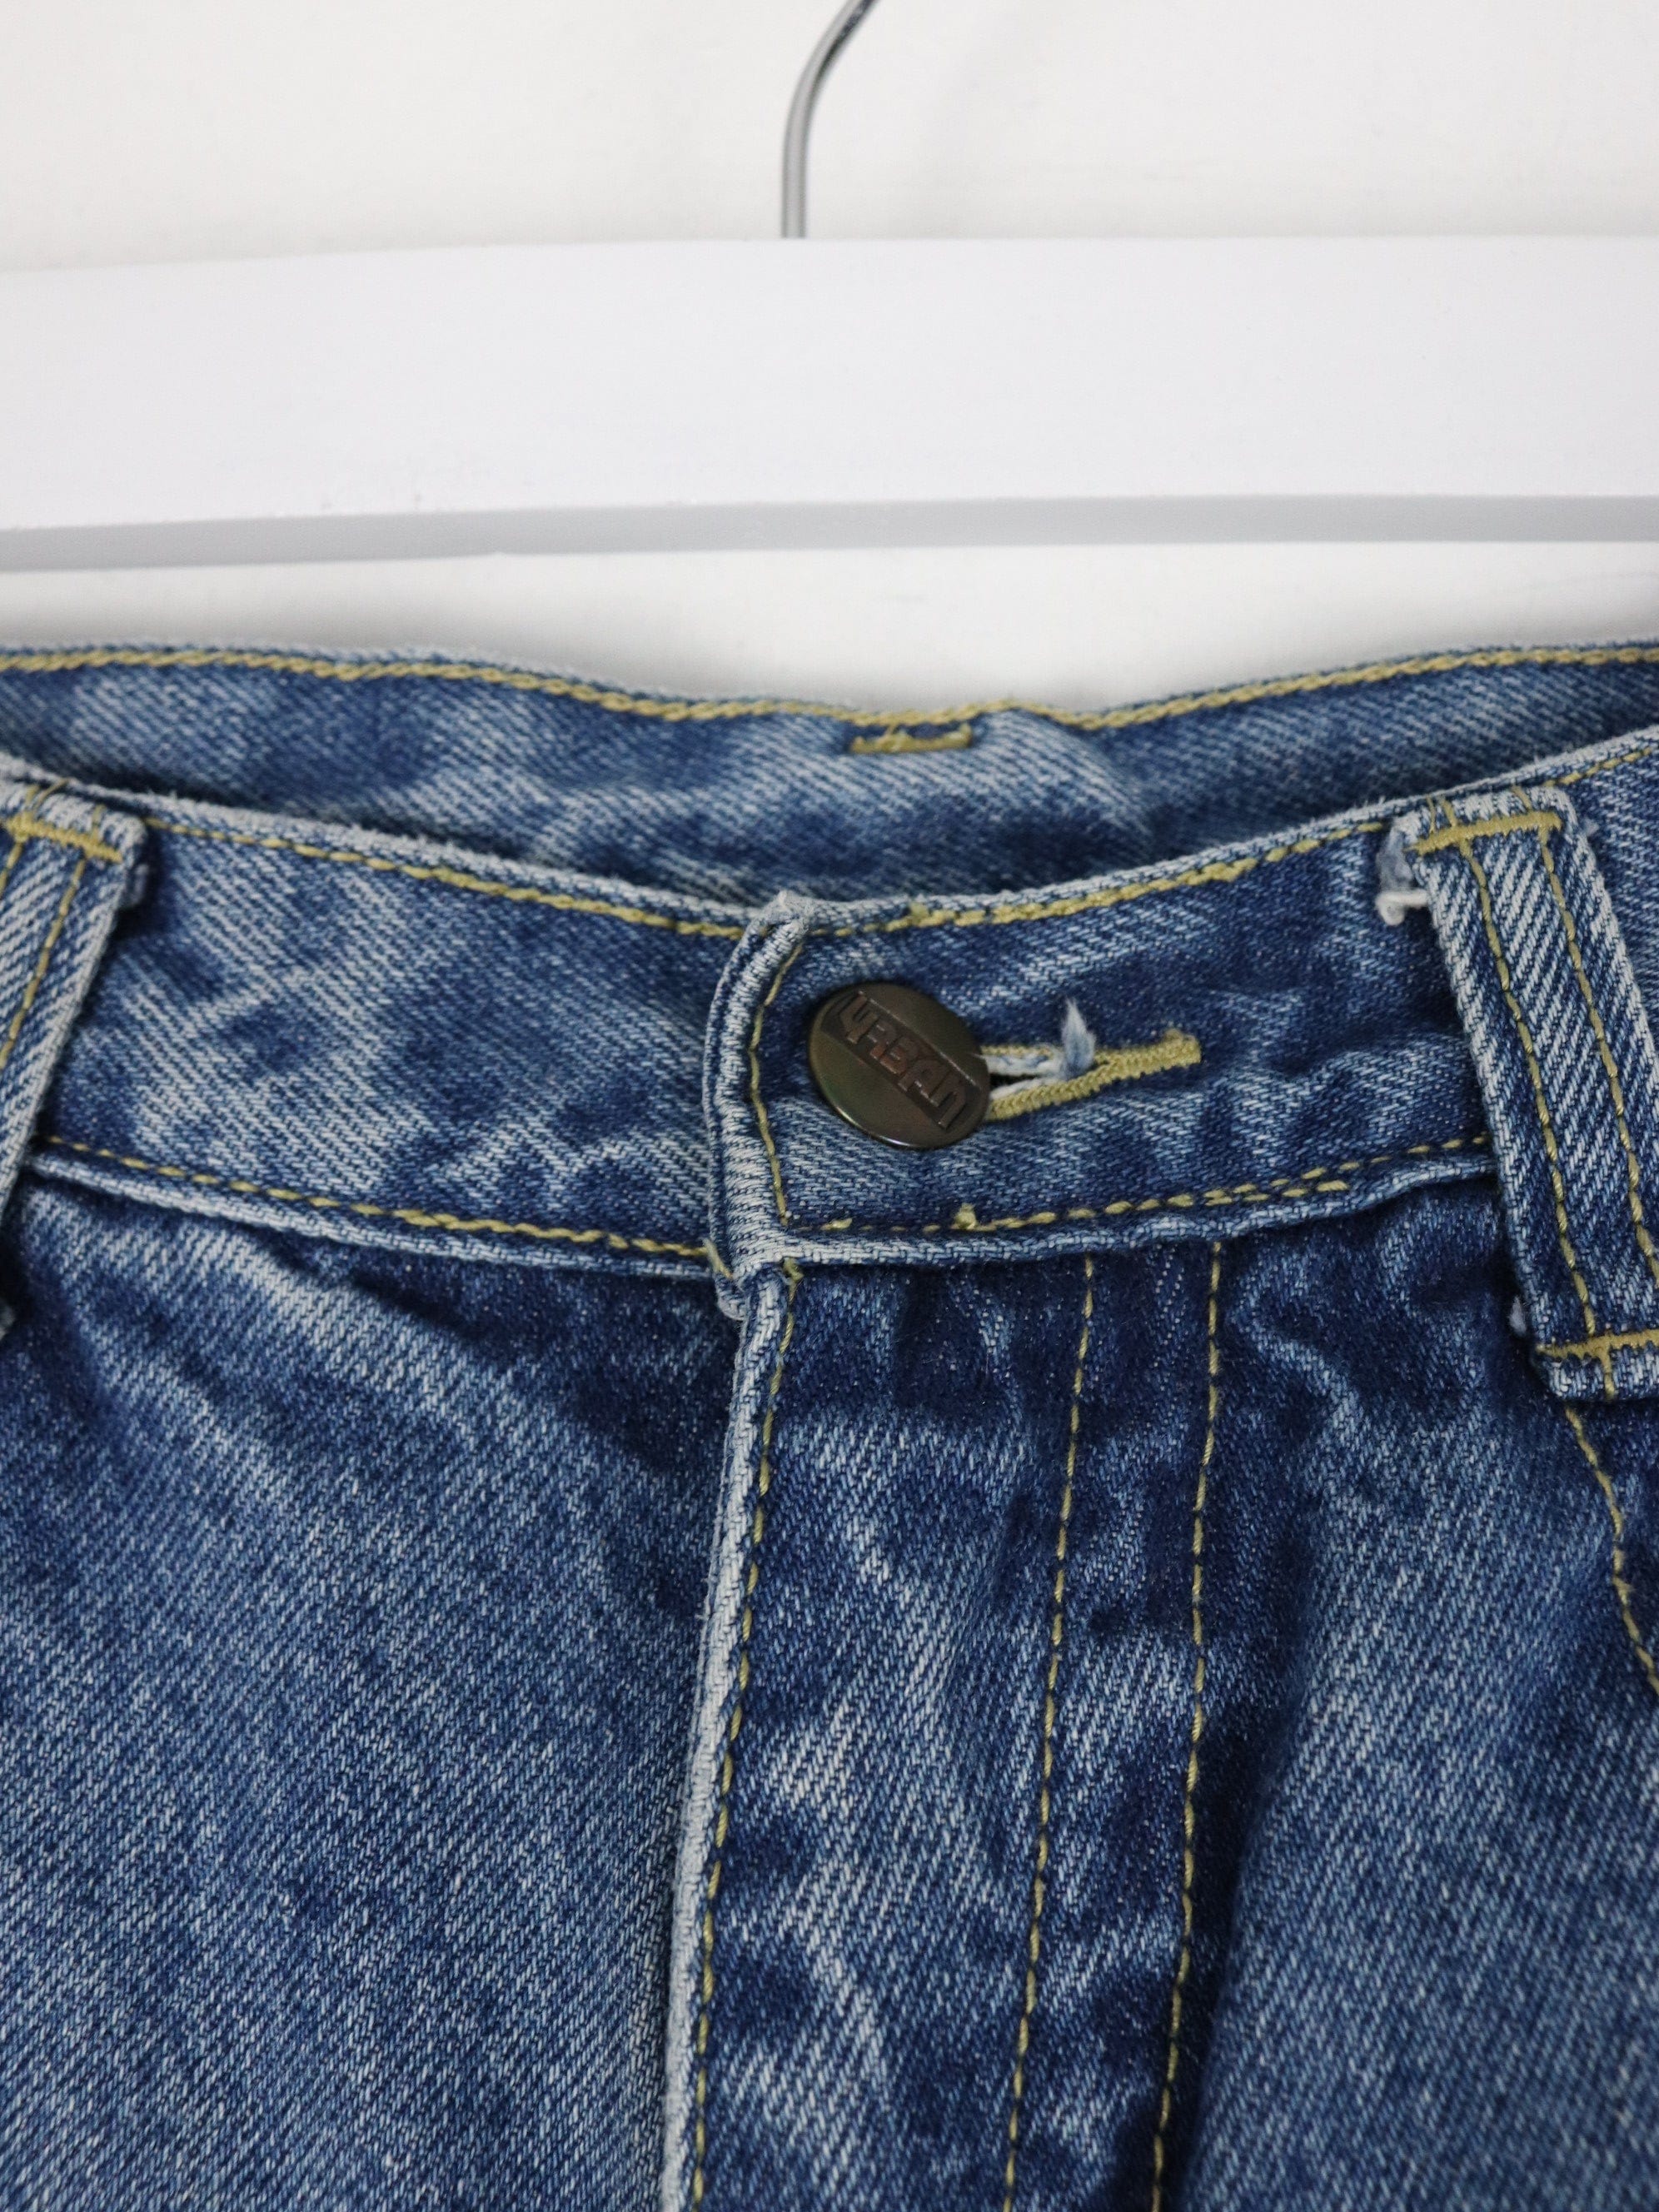 Vintage Urban Pants Youth 10 Blue Denim Jeans Y2K 24 x 21 – Proper